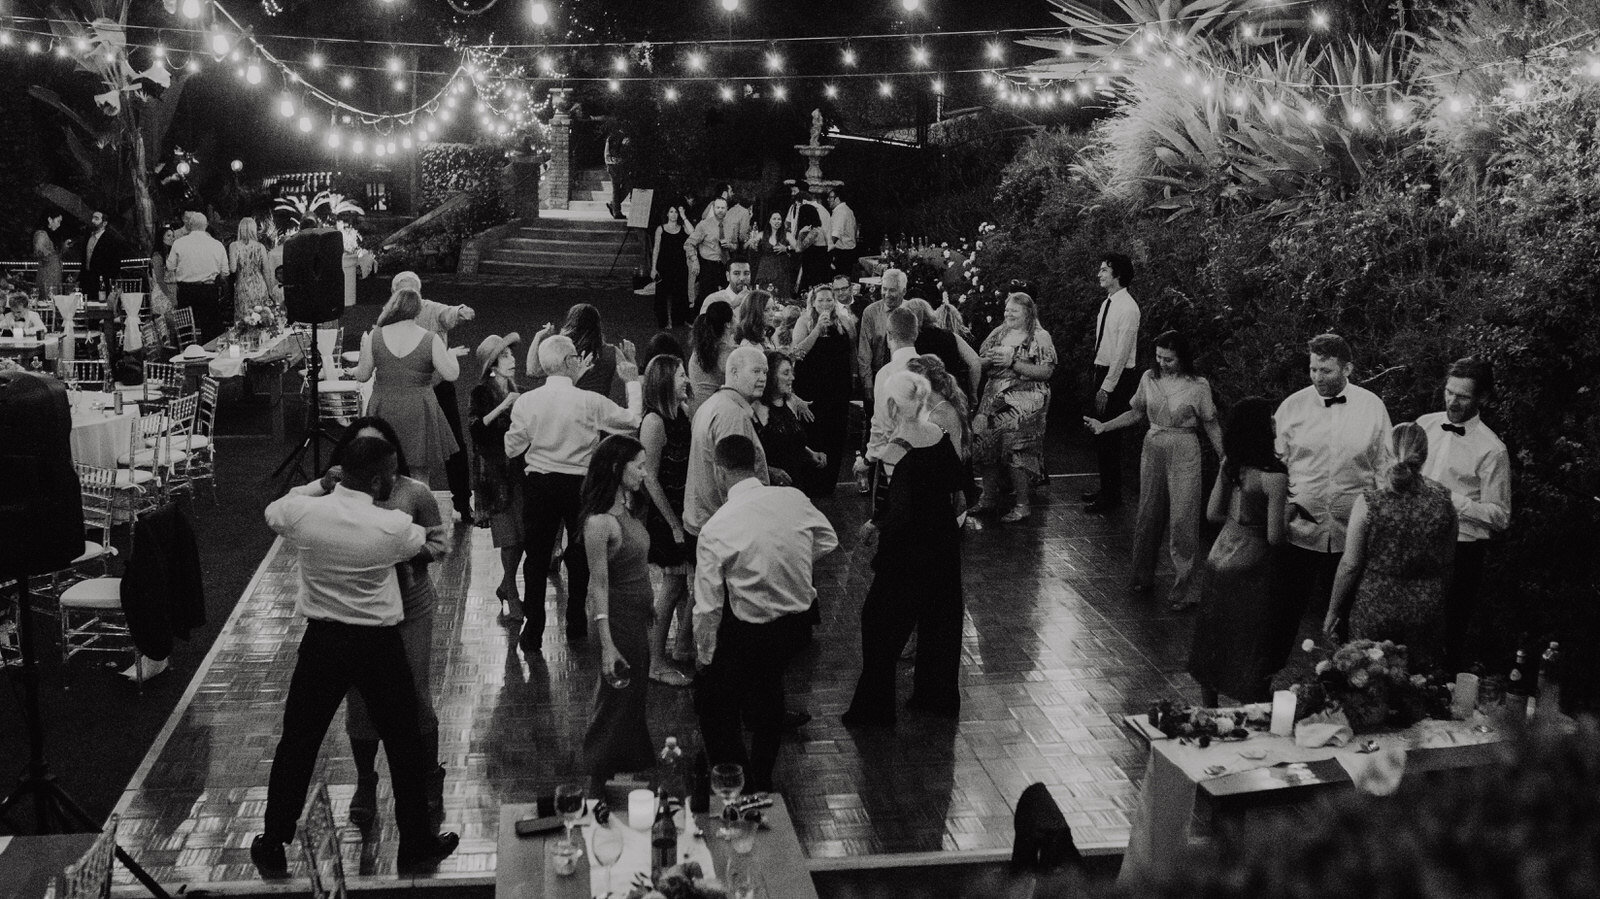 Houdini Estate wedding reception dancefloor area